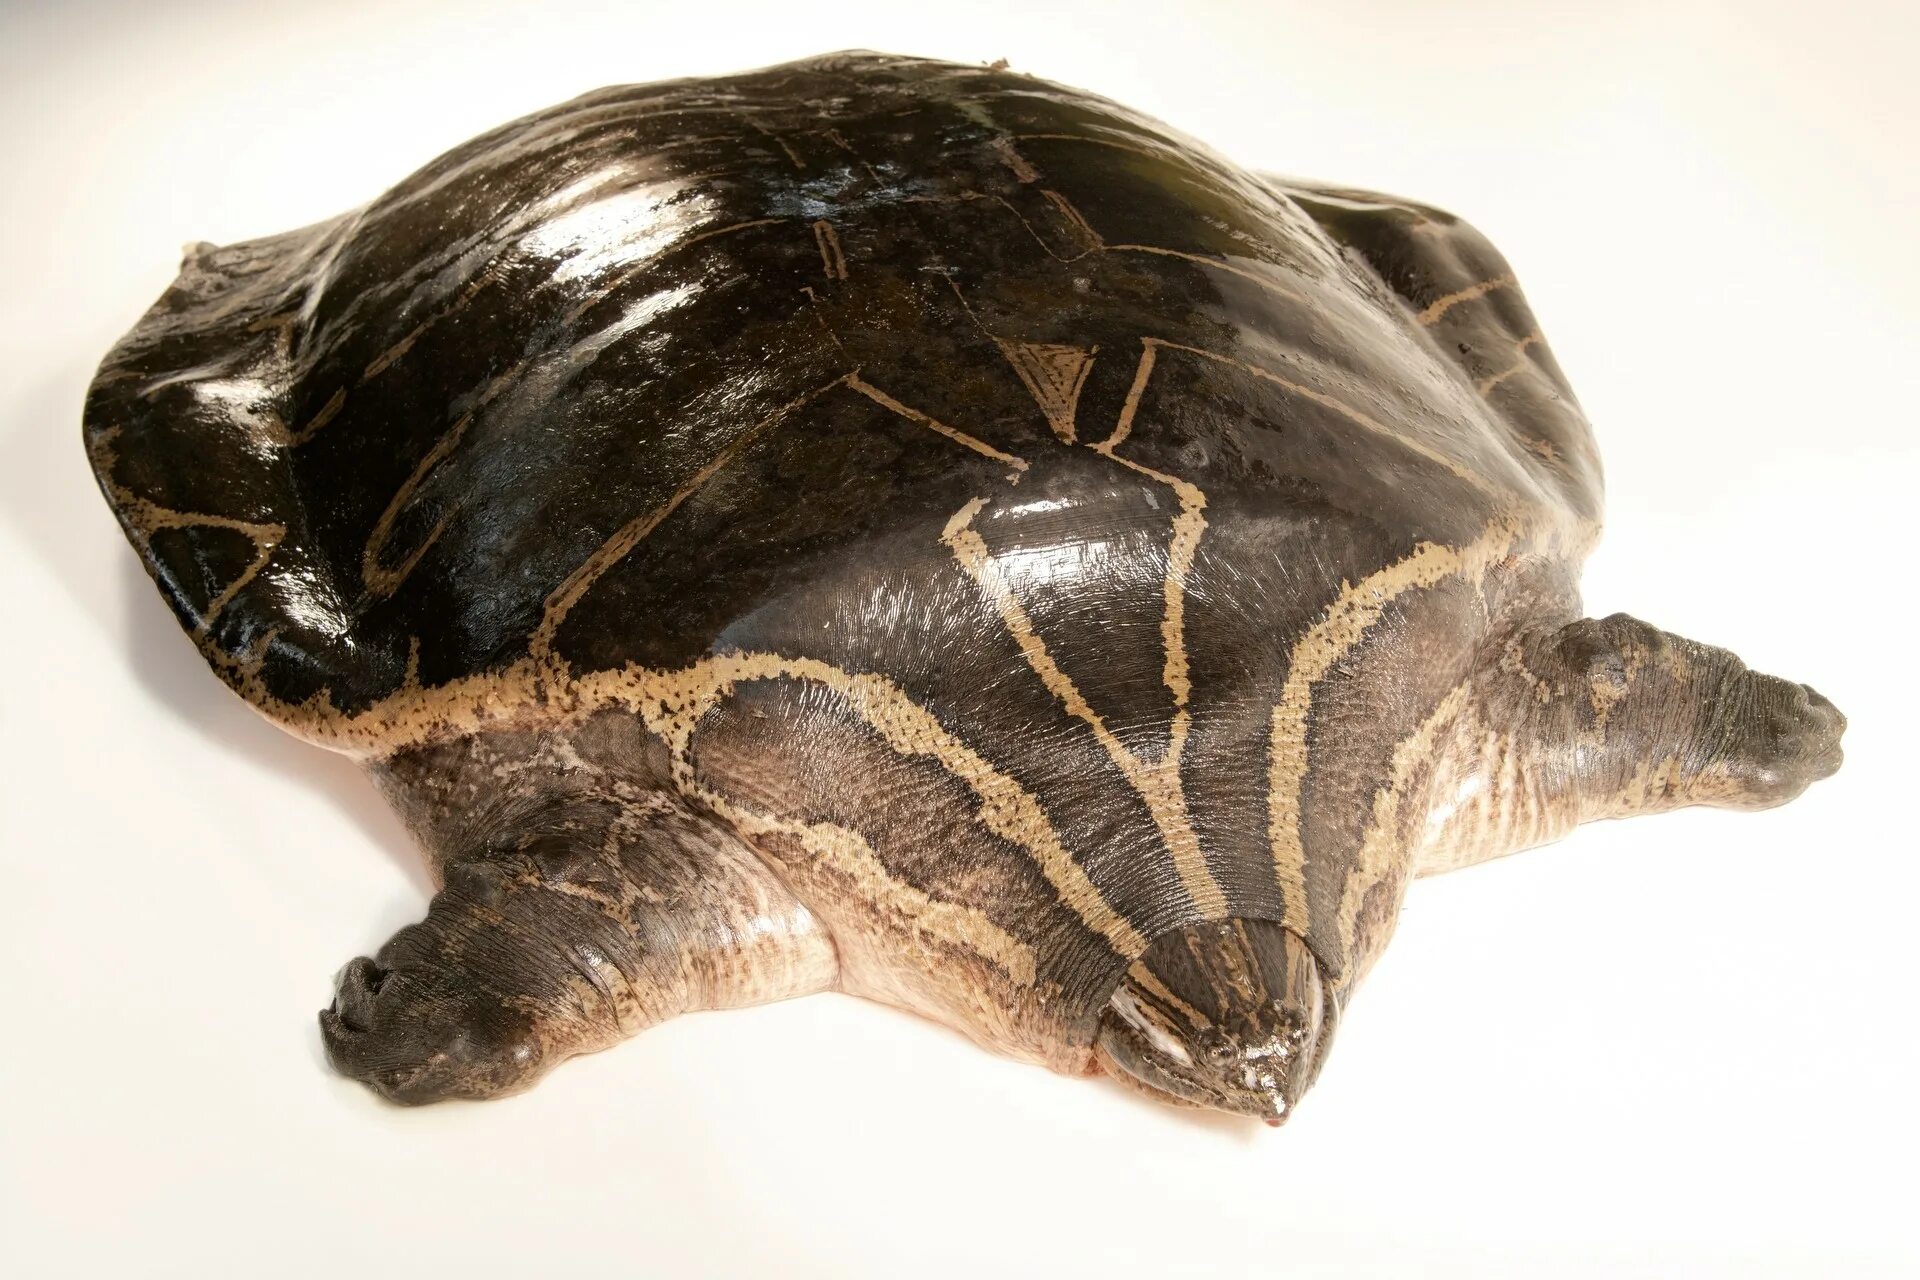 Left turtle. Черепахи Читра. Chitra Chitra (узкоголовая полосатая черепаха).